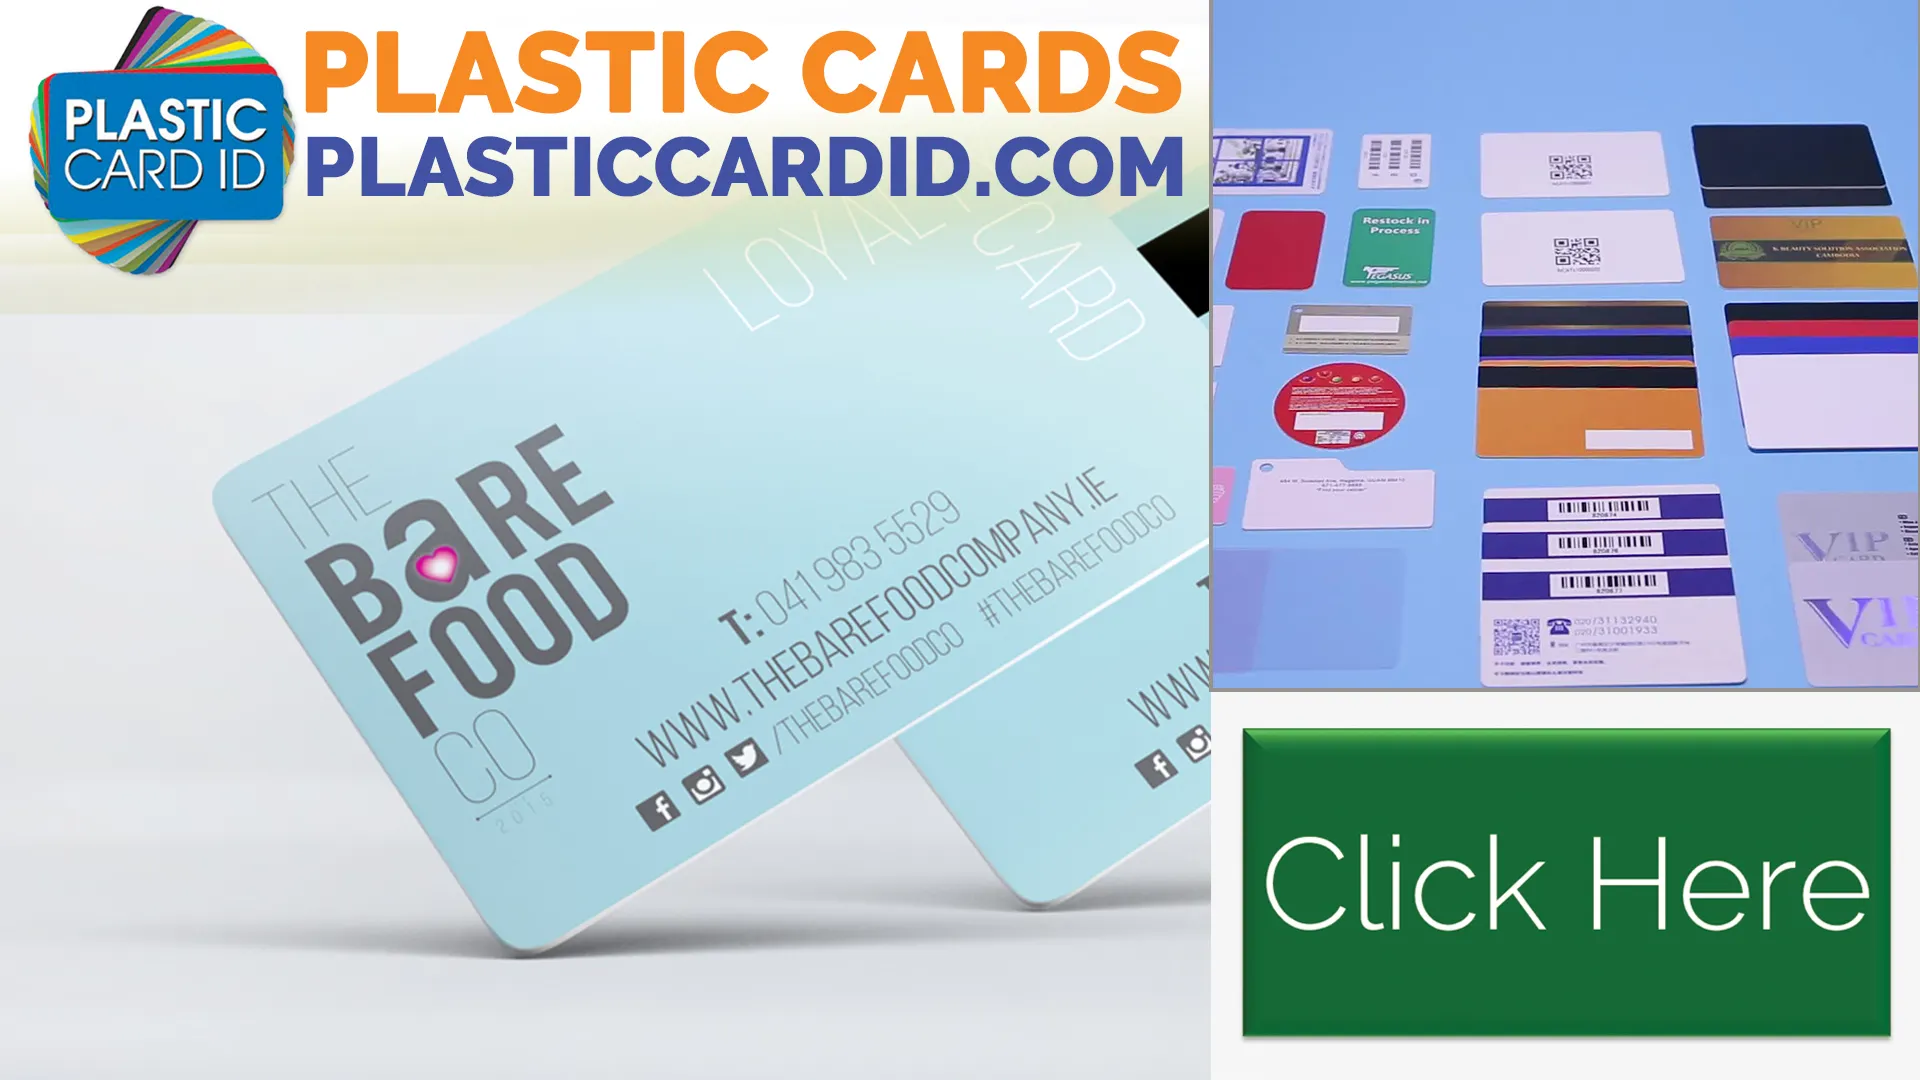 Meet Our Diverse Range of Plastic Cards